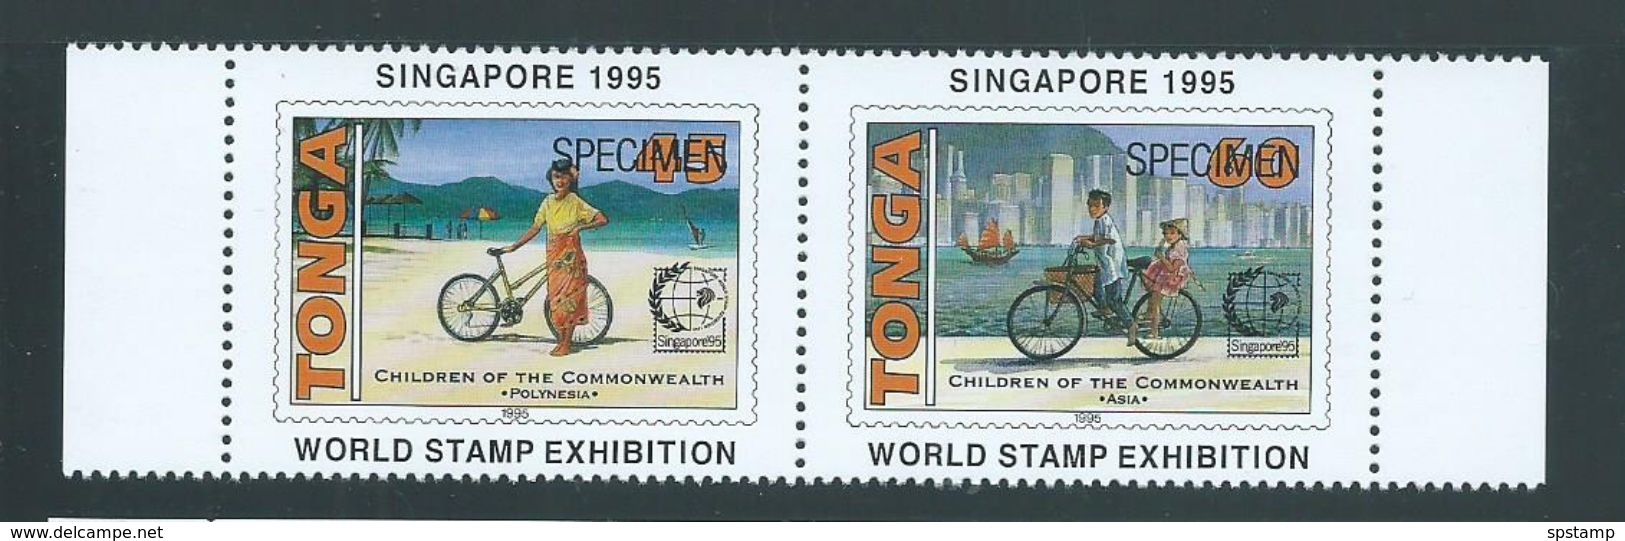 Tonga 1995 Singapore Stamp Exhibition Joined Pair MNH Specimen Overprint - Tonga (1970-...)